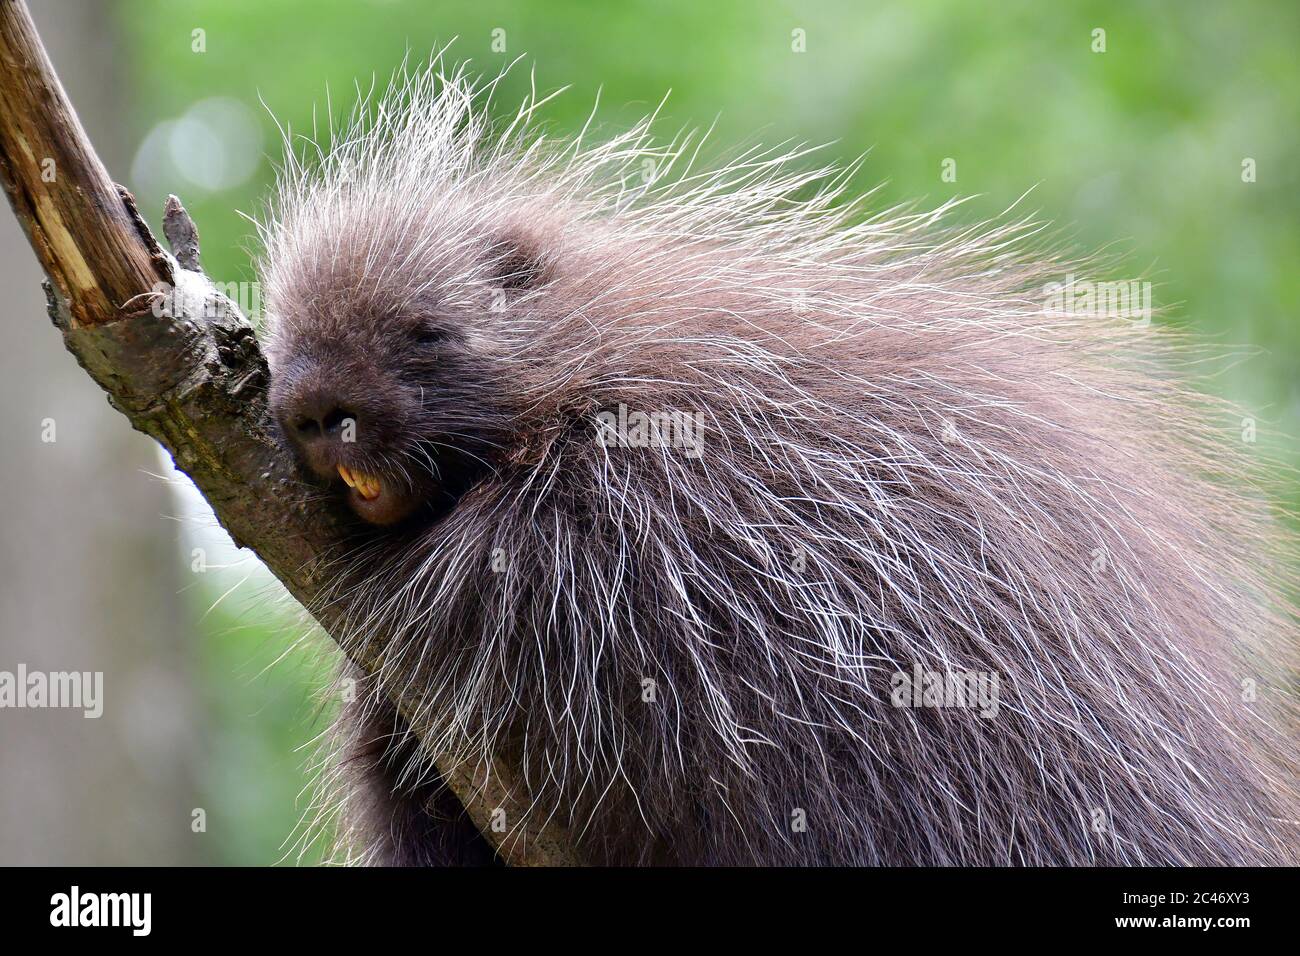 North American porcupine, Canadian porcupine or common porcupine, Urson, Baumstachelschwein, Erethizon dorsatum, észak-amerikai kúszósül Stock Photo